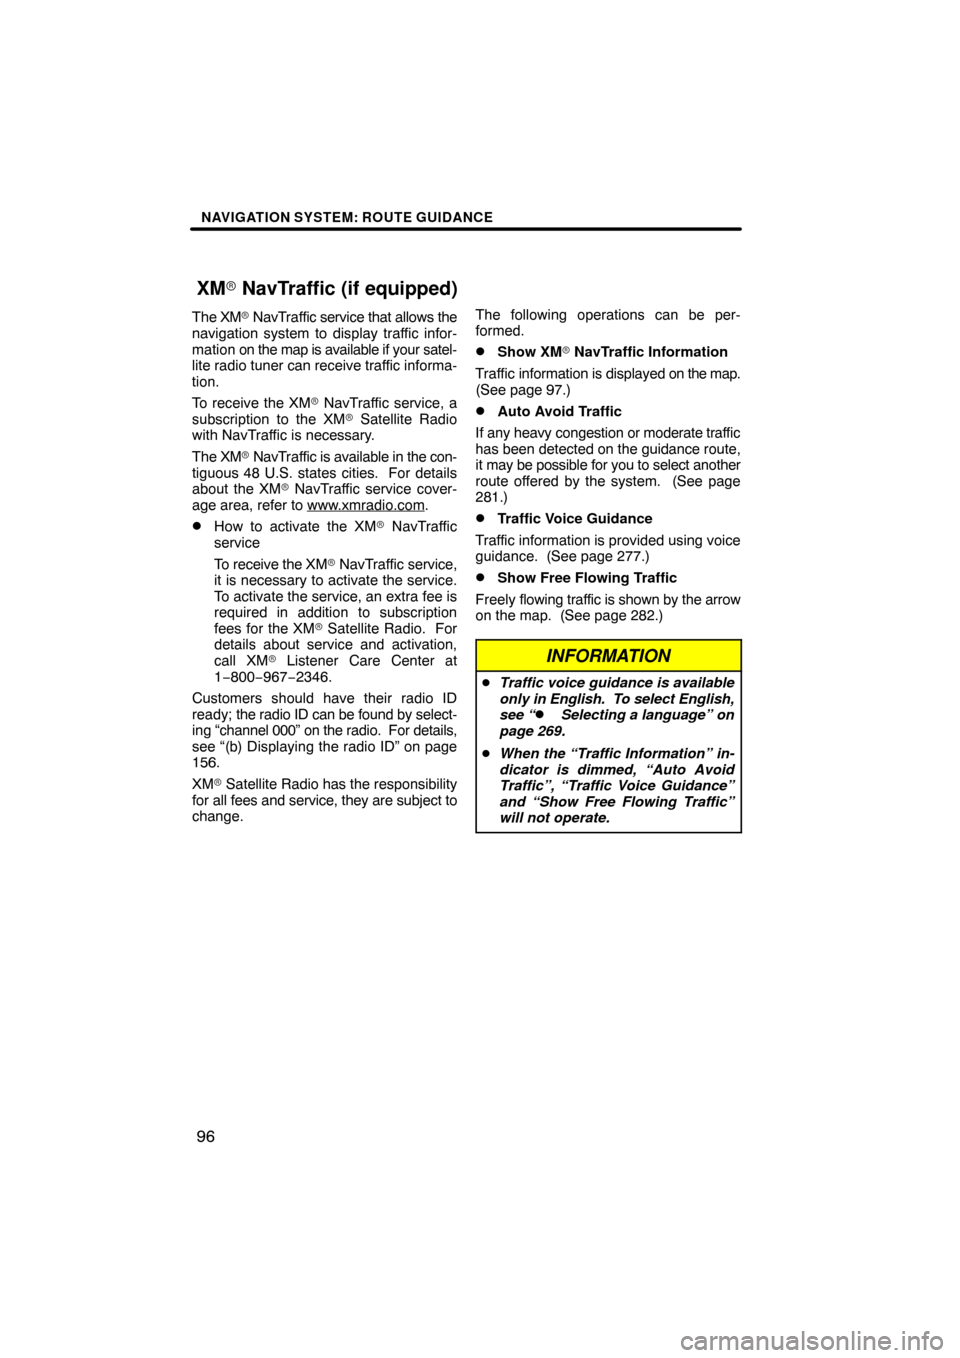 TOYOTA LAND CRUISER 2010 J200 Navigation Manual NAVIGATION SYSTEM: ROUTE GUIDANCE
96
The XM NavTraffic service that allows the
navigation system to display traffic infor-
mation on the map is available if your satel-
lite radio tuner can receive t